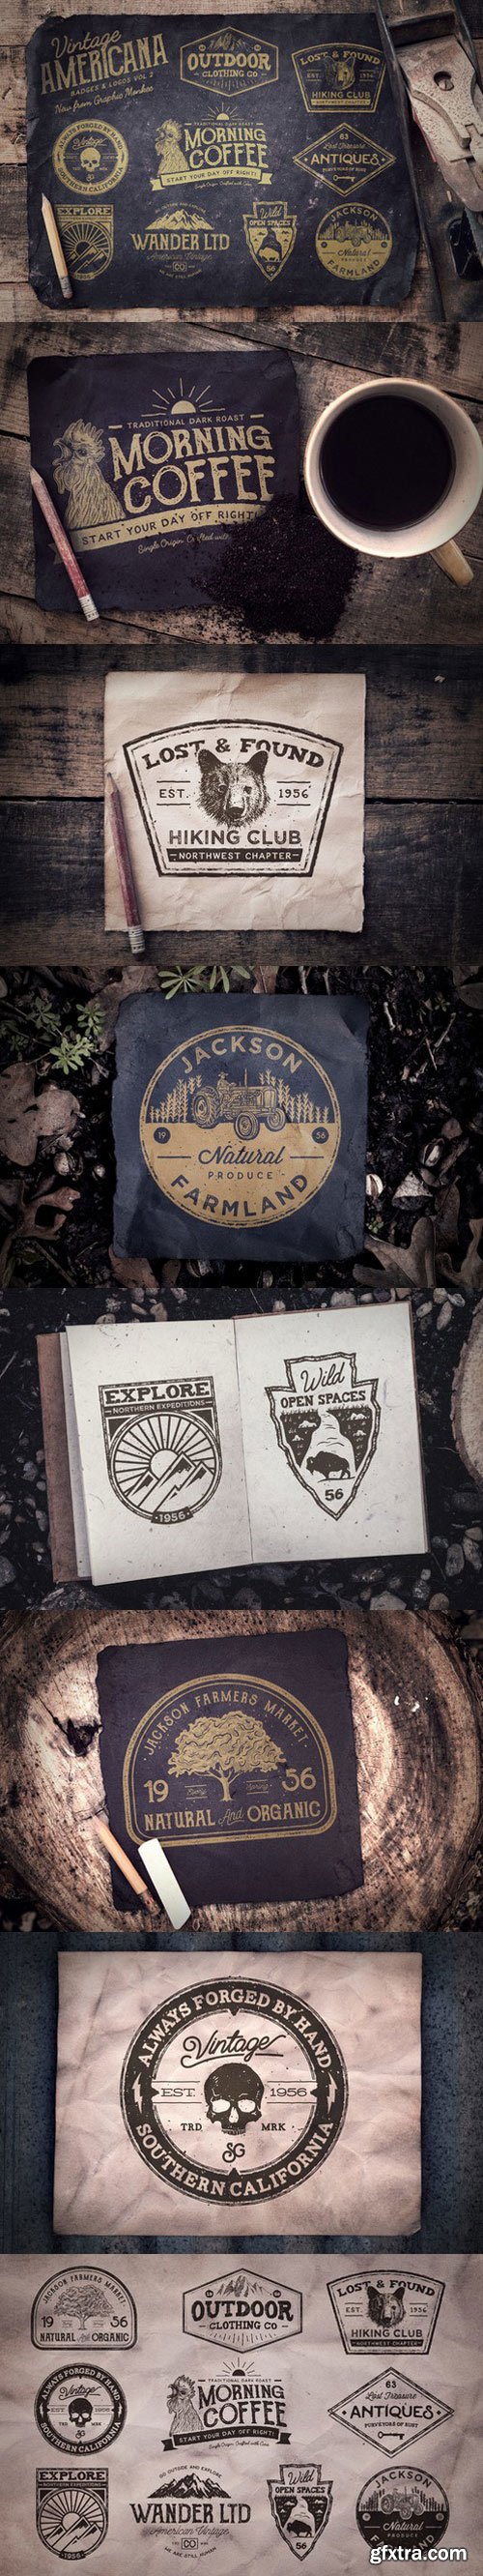 CM - Vintage Americana Badges and Logos 2 552363